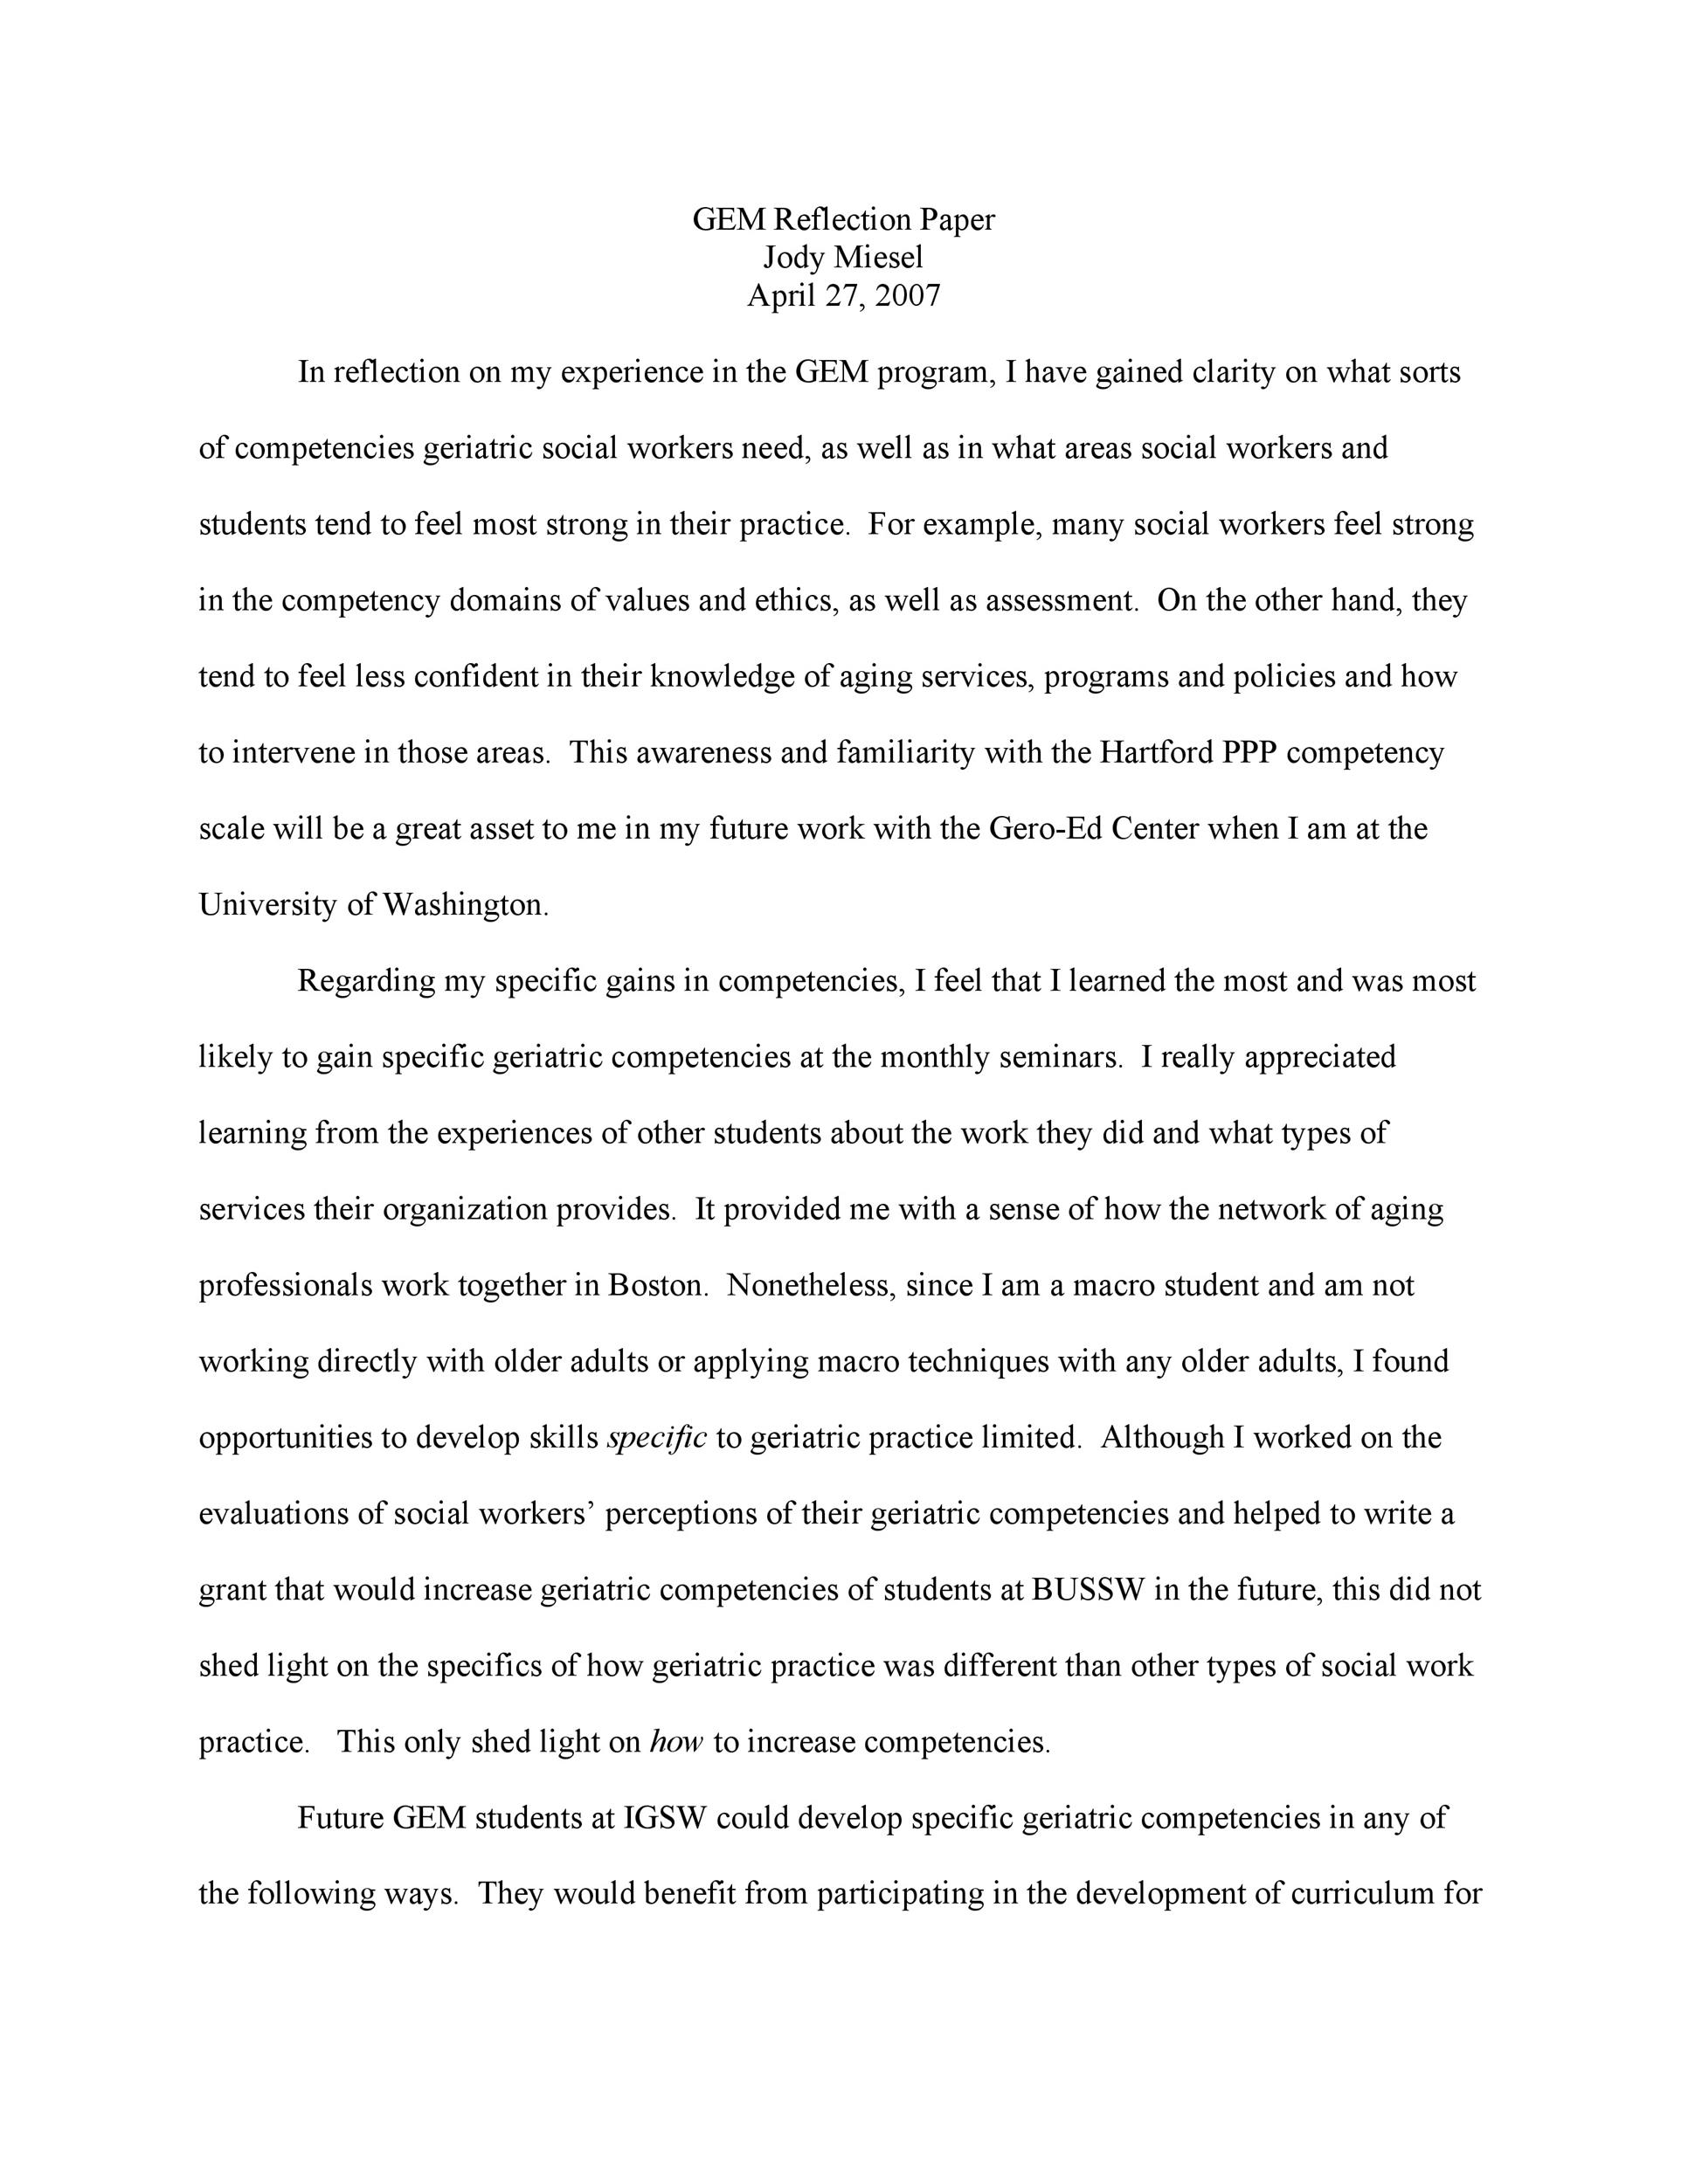 Free reflective essay example 18